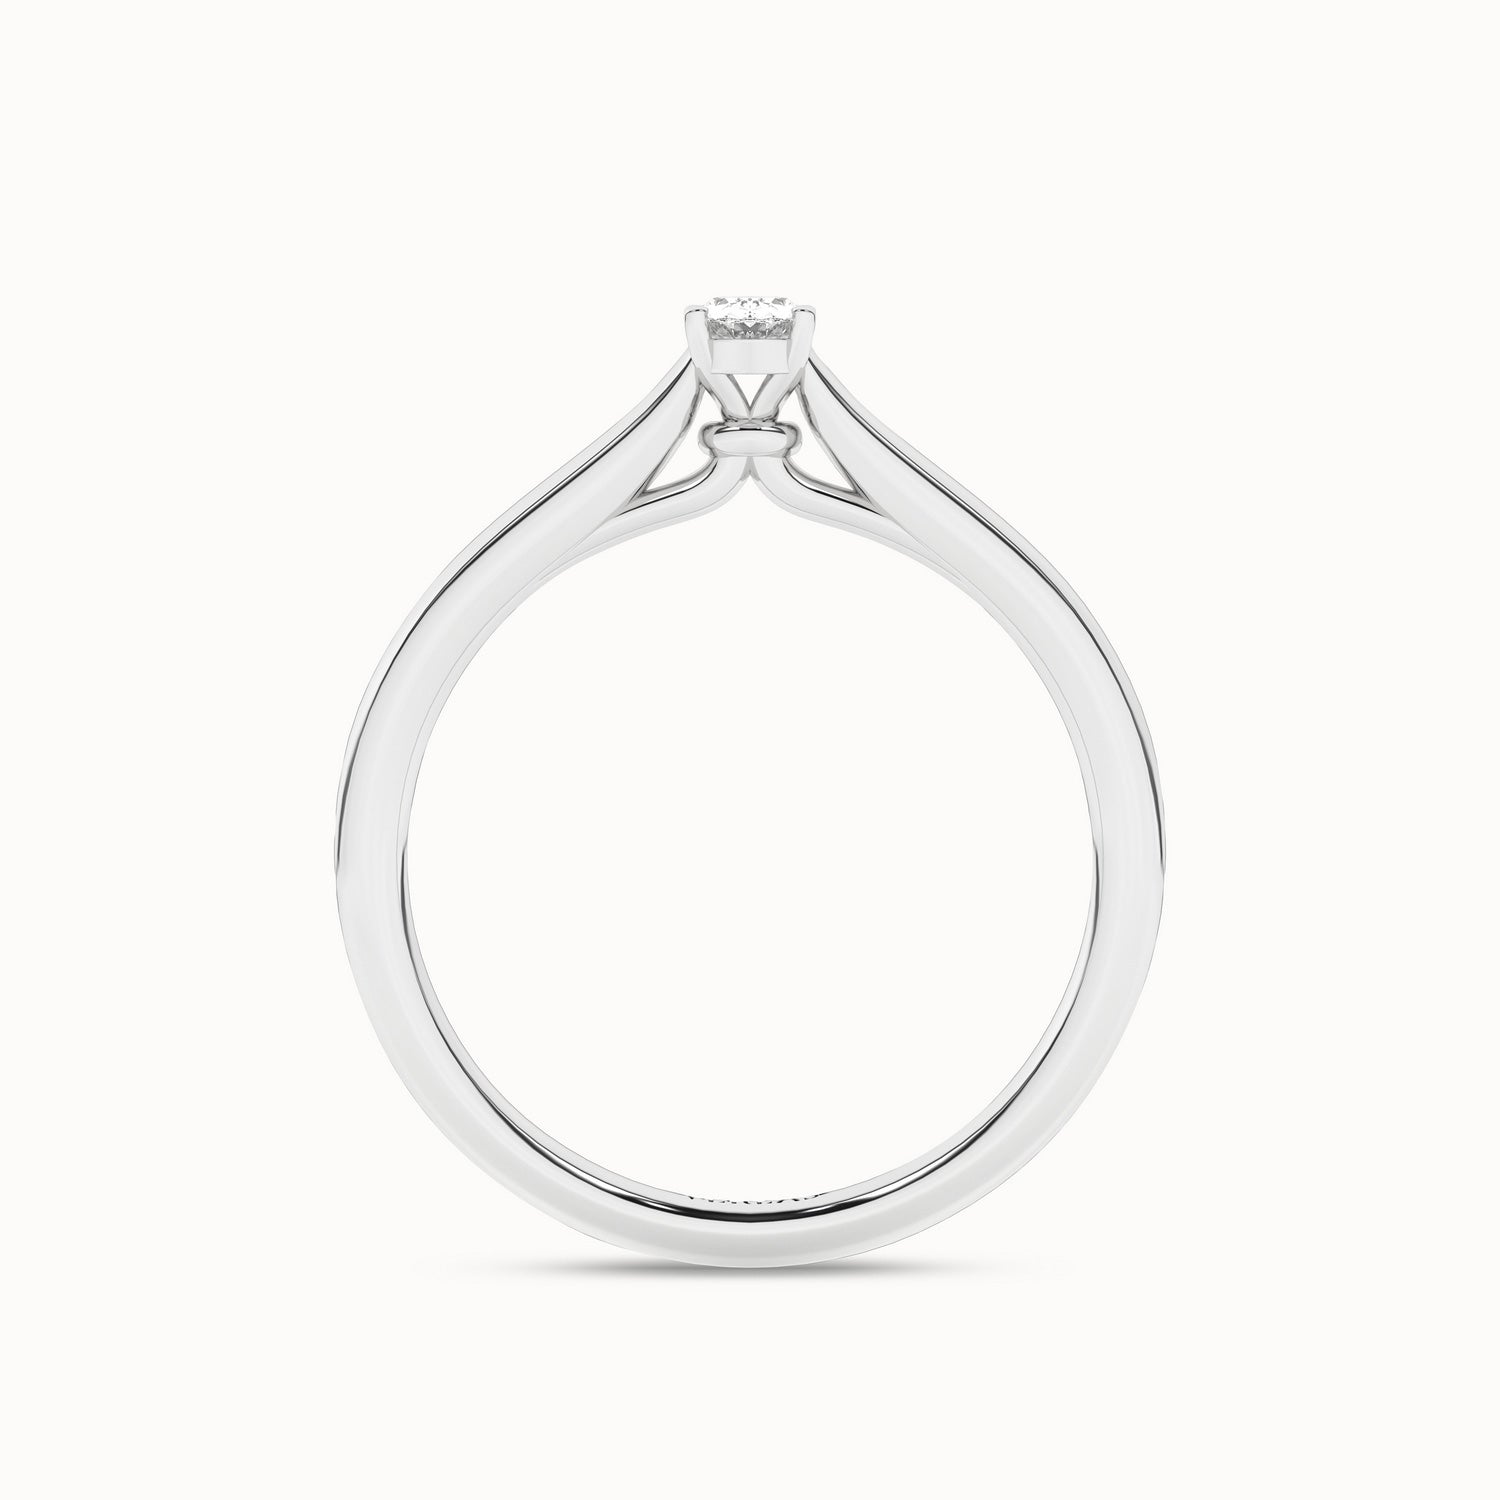 Iconic Ellipse Ring_Product Angle_1/6-3